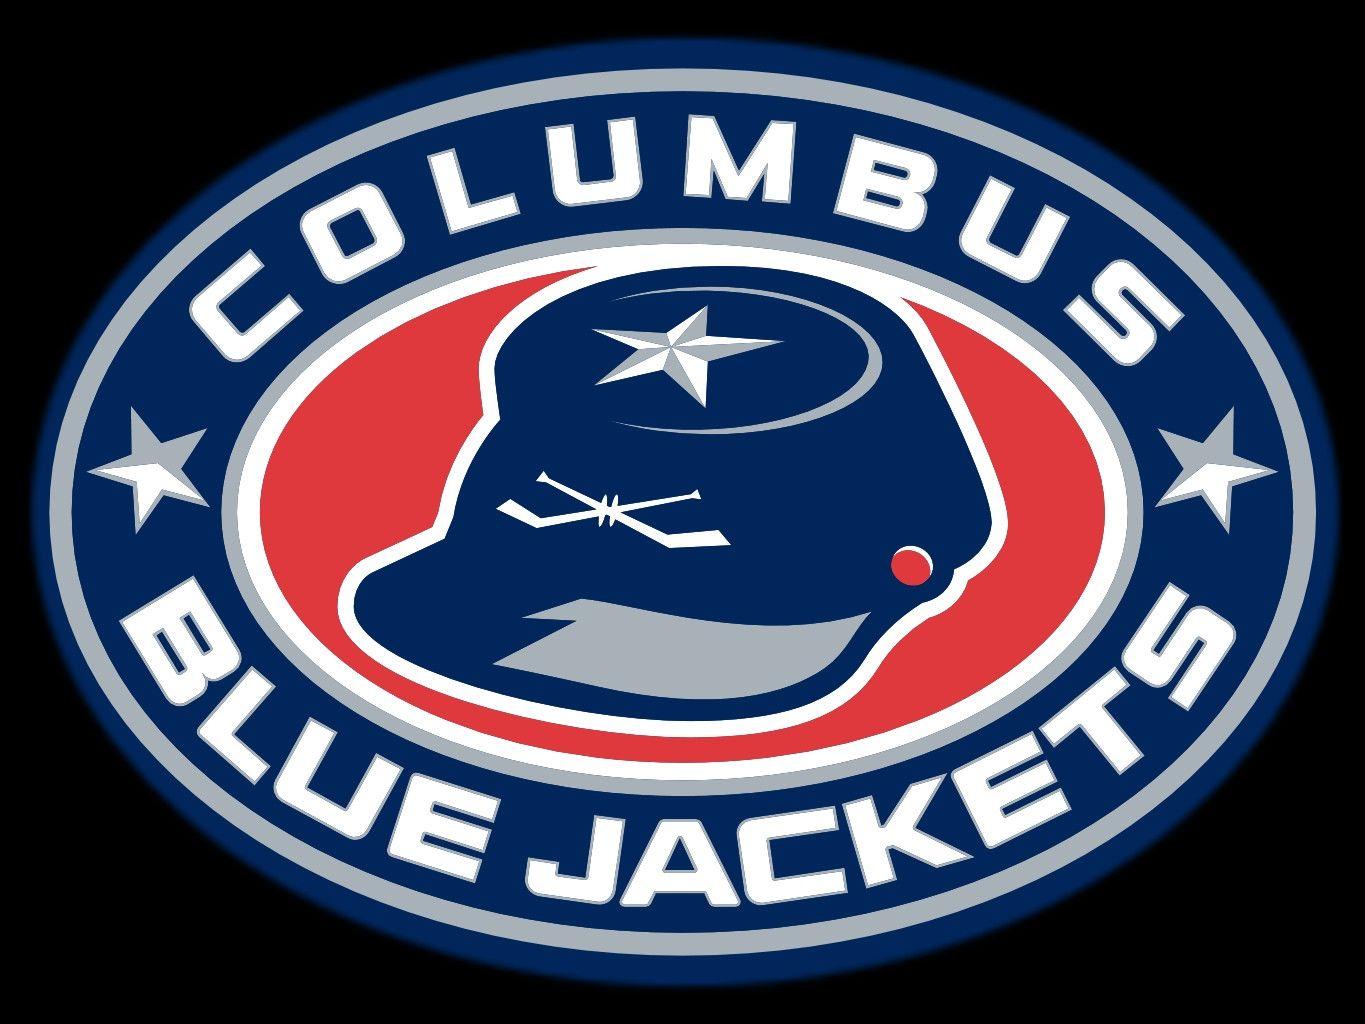 Columbus Blue Jackets Wallpaper